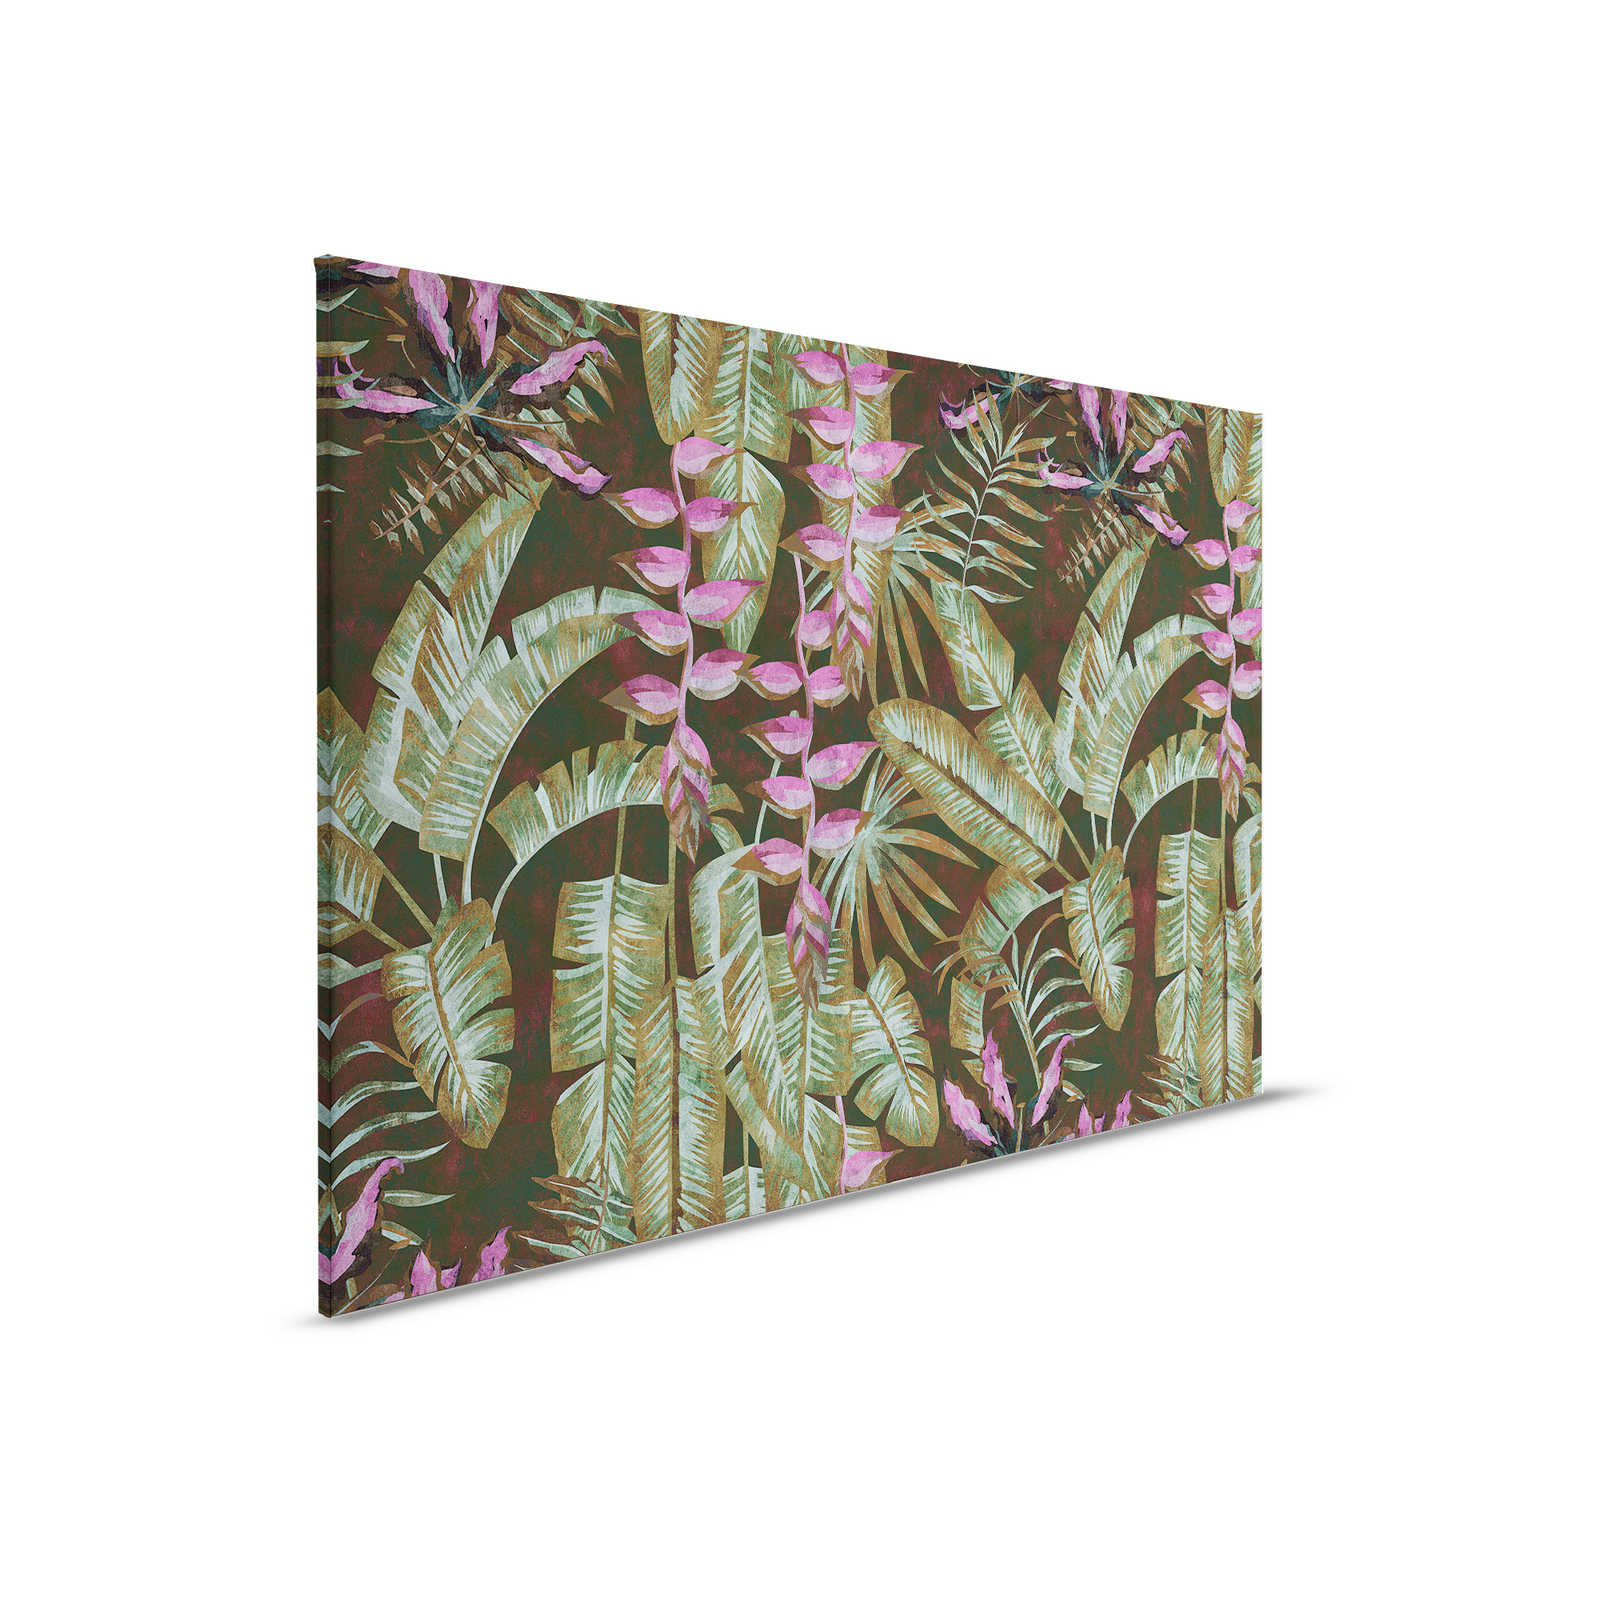 Tropicana 1 - Dschungel Leinwandbild mit Bananenblättern & Farnen – 0,90 m x 0,60 m
